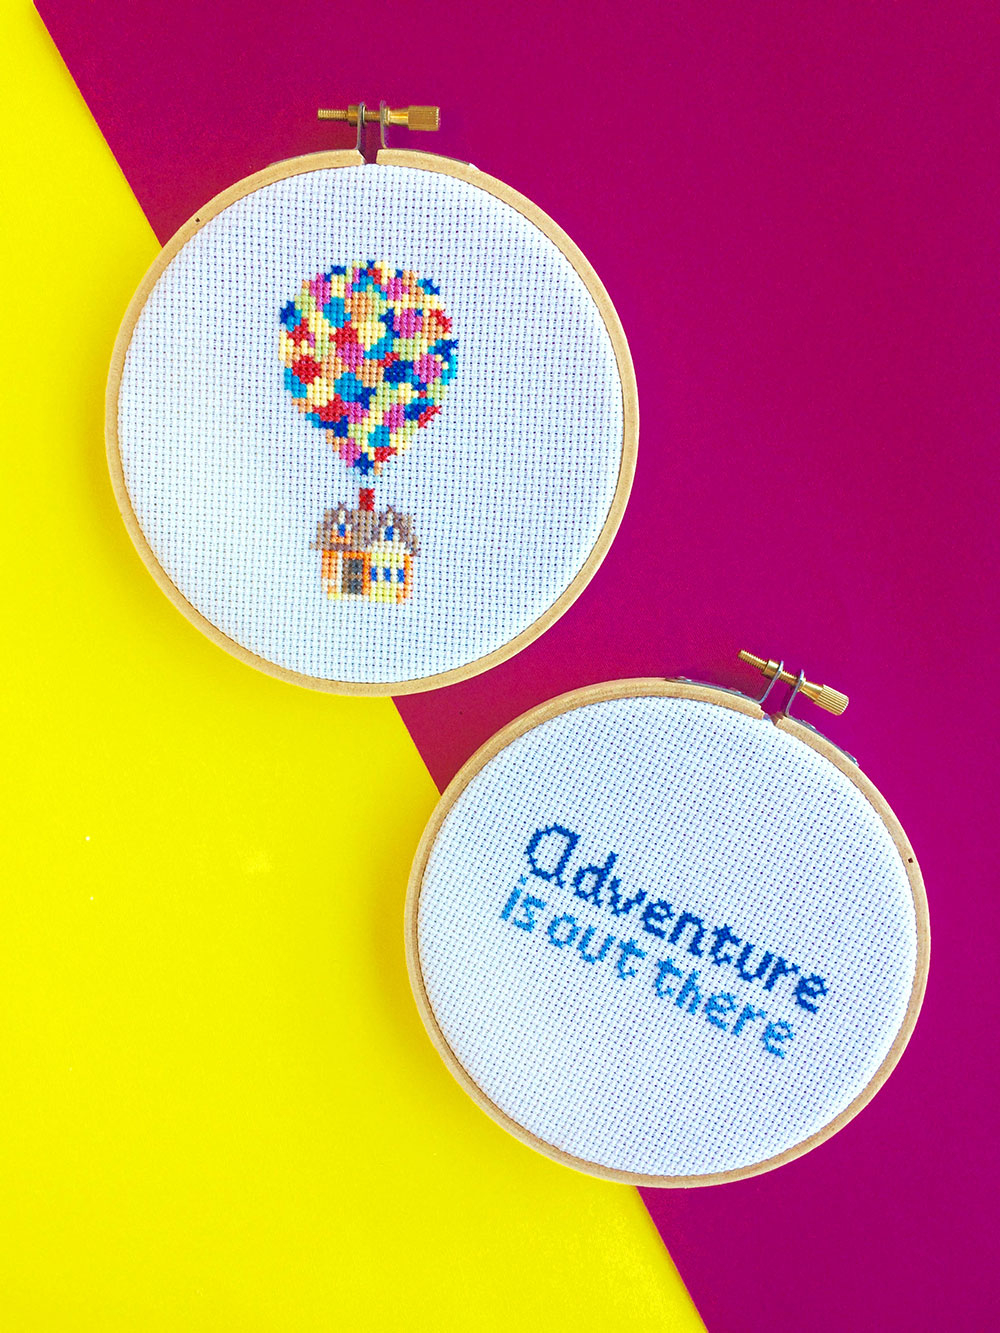 Disney Embroidery Patterns Up Cross Stitch Disney Family